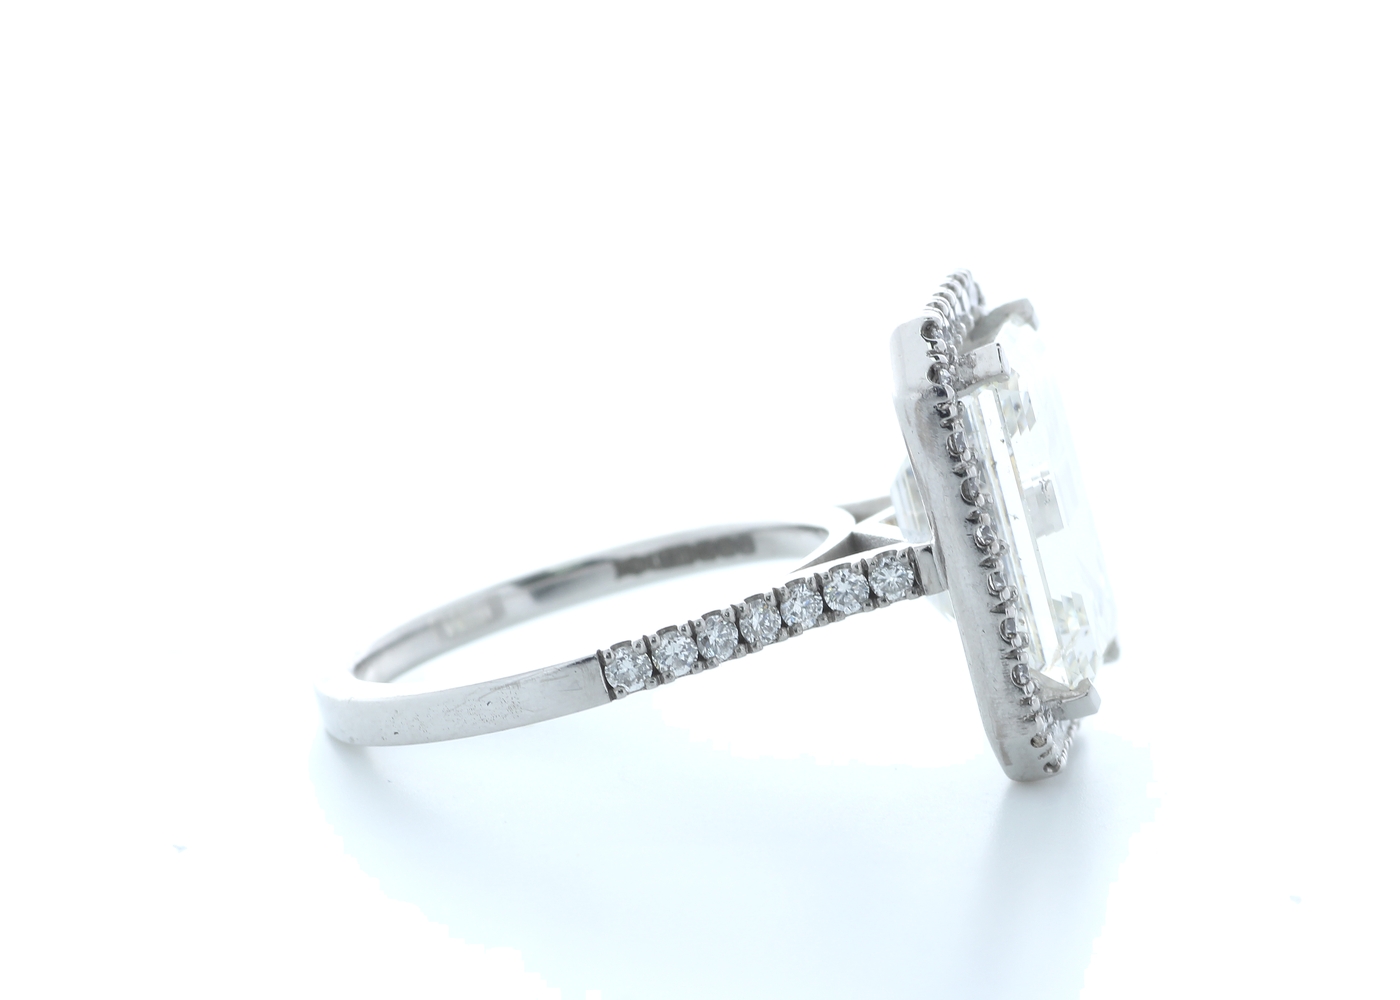 18k White Gold Emerald Cut Halo Diamond Ring 5.85 Carats - Image 4 of 5